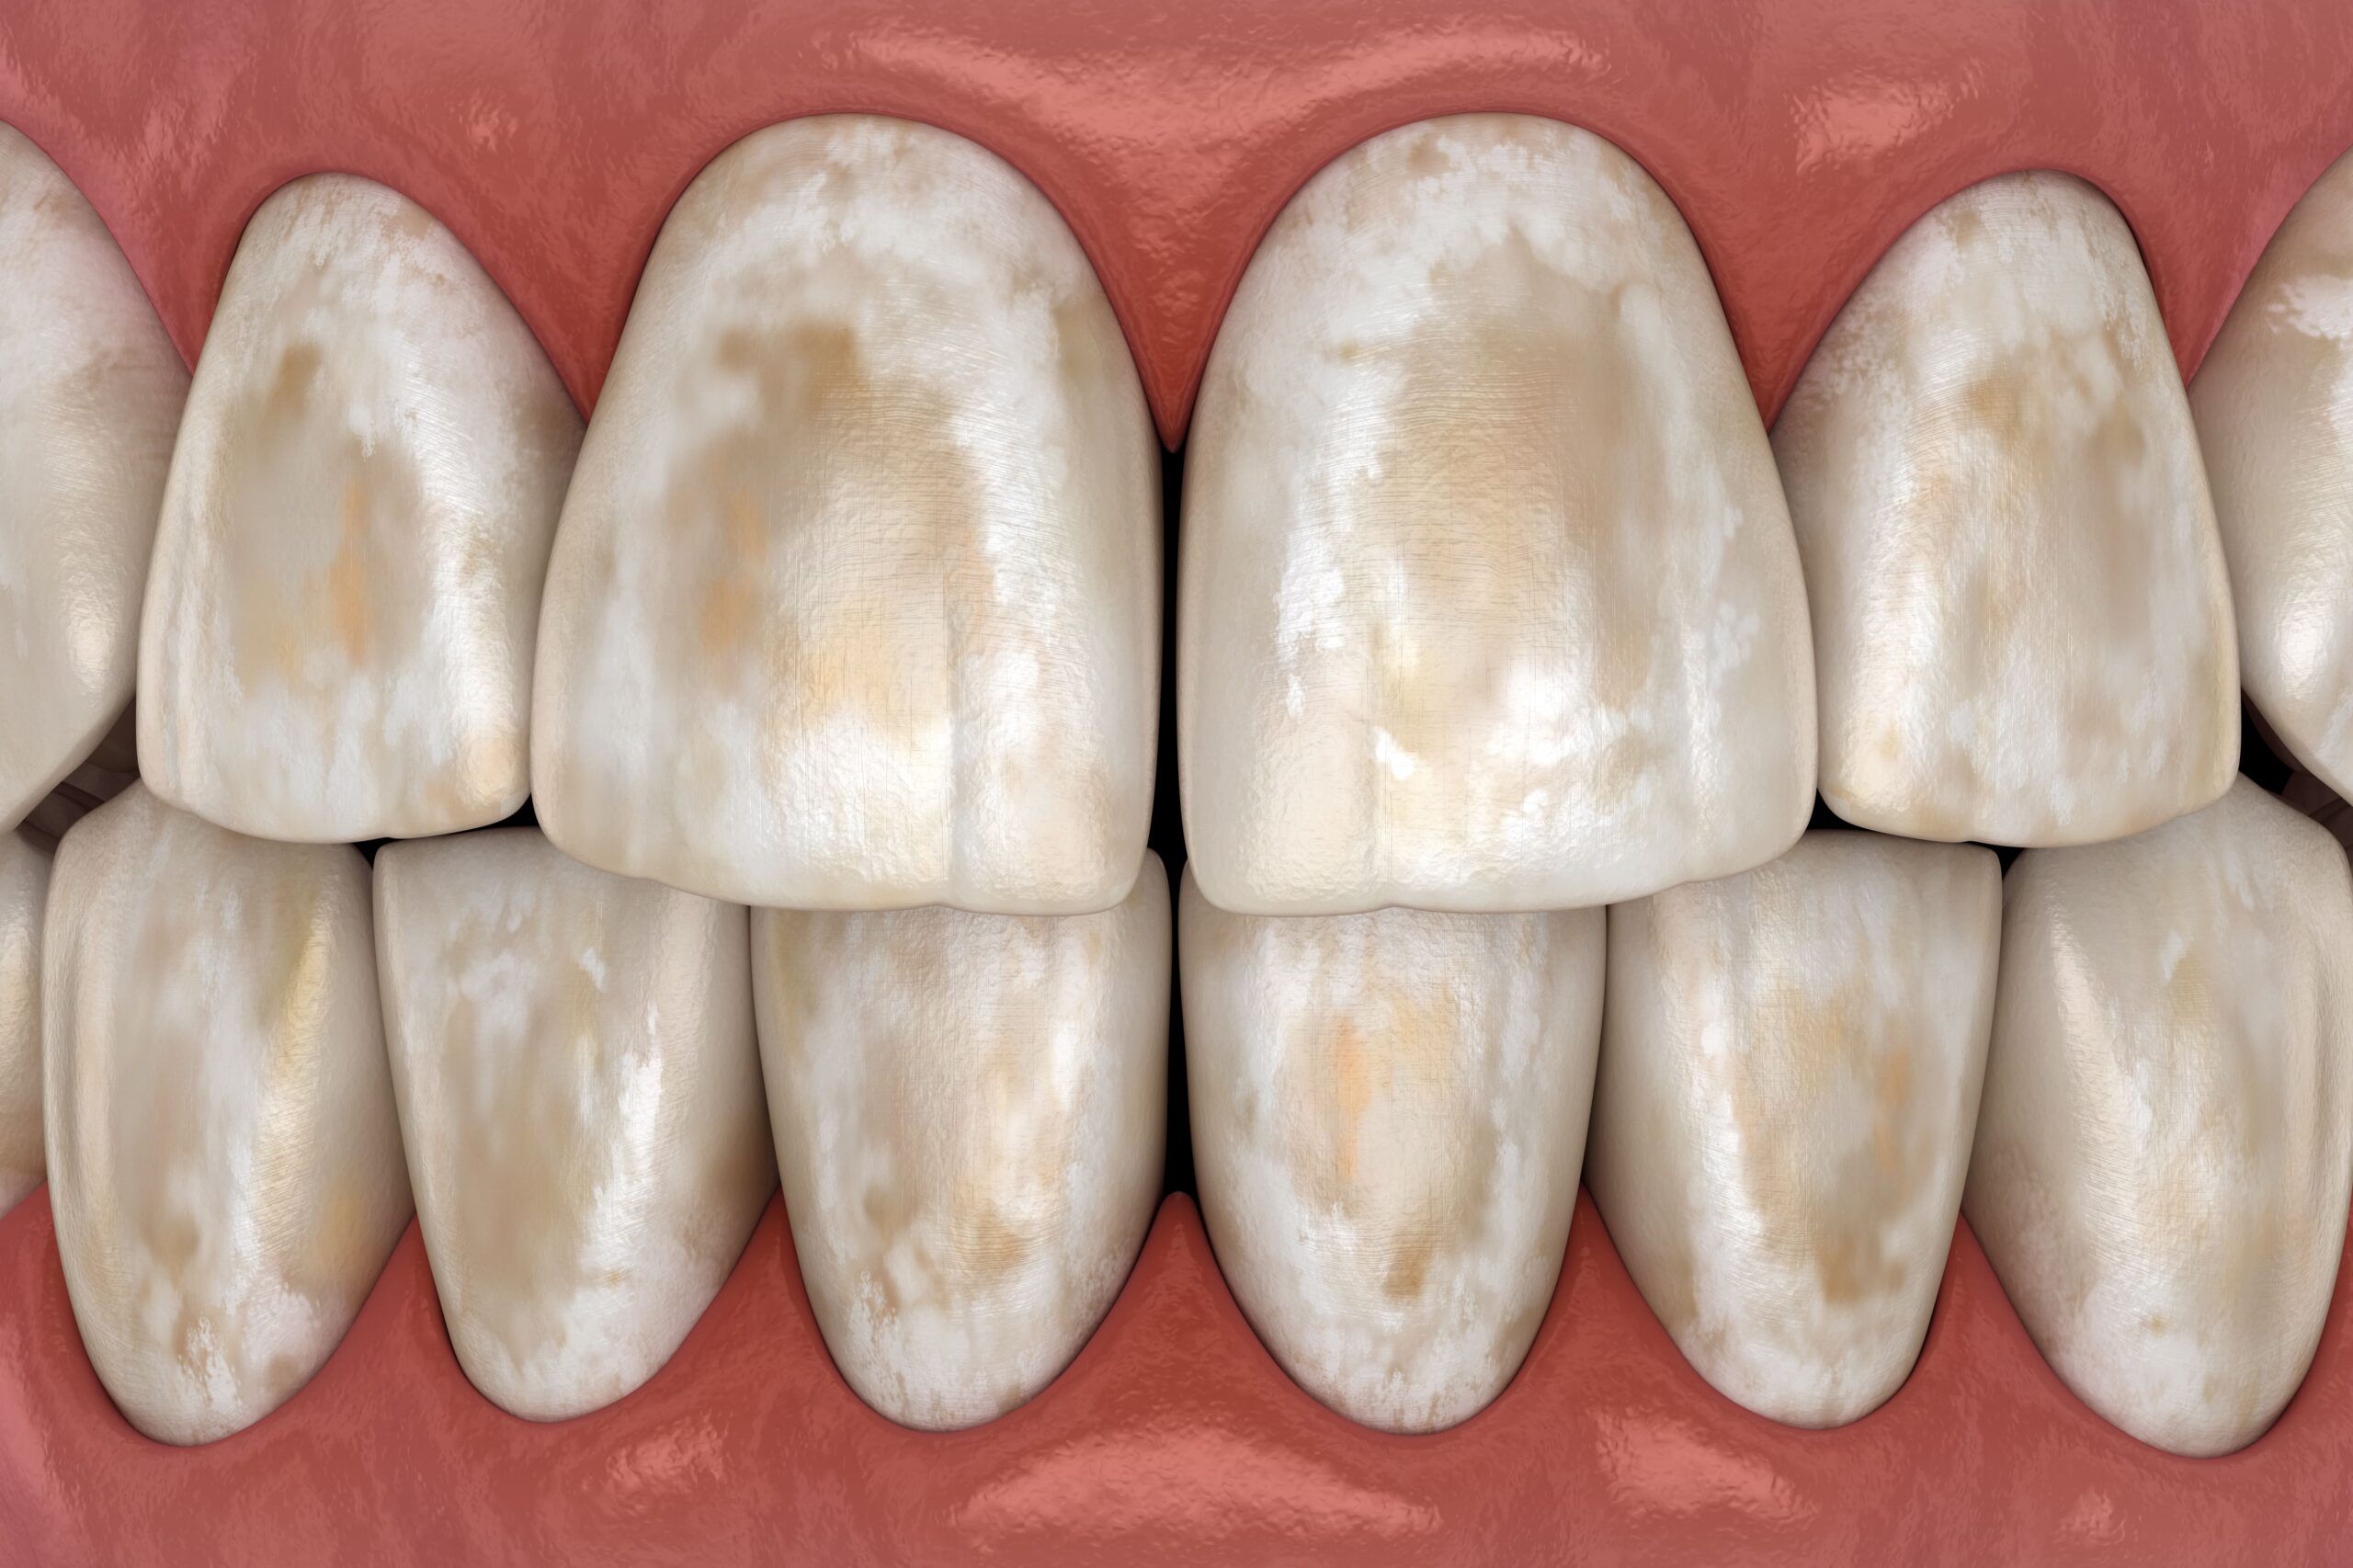 eroded tooth enamel